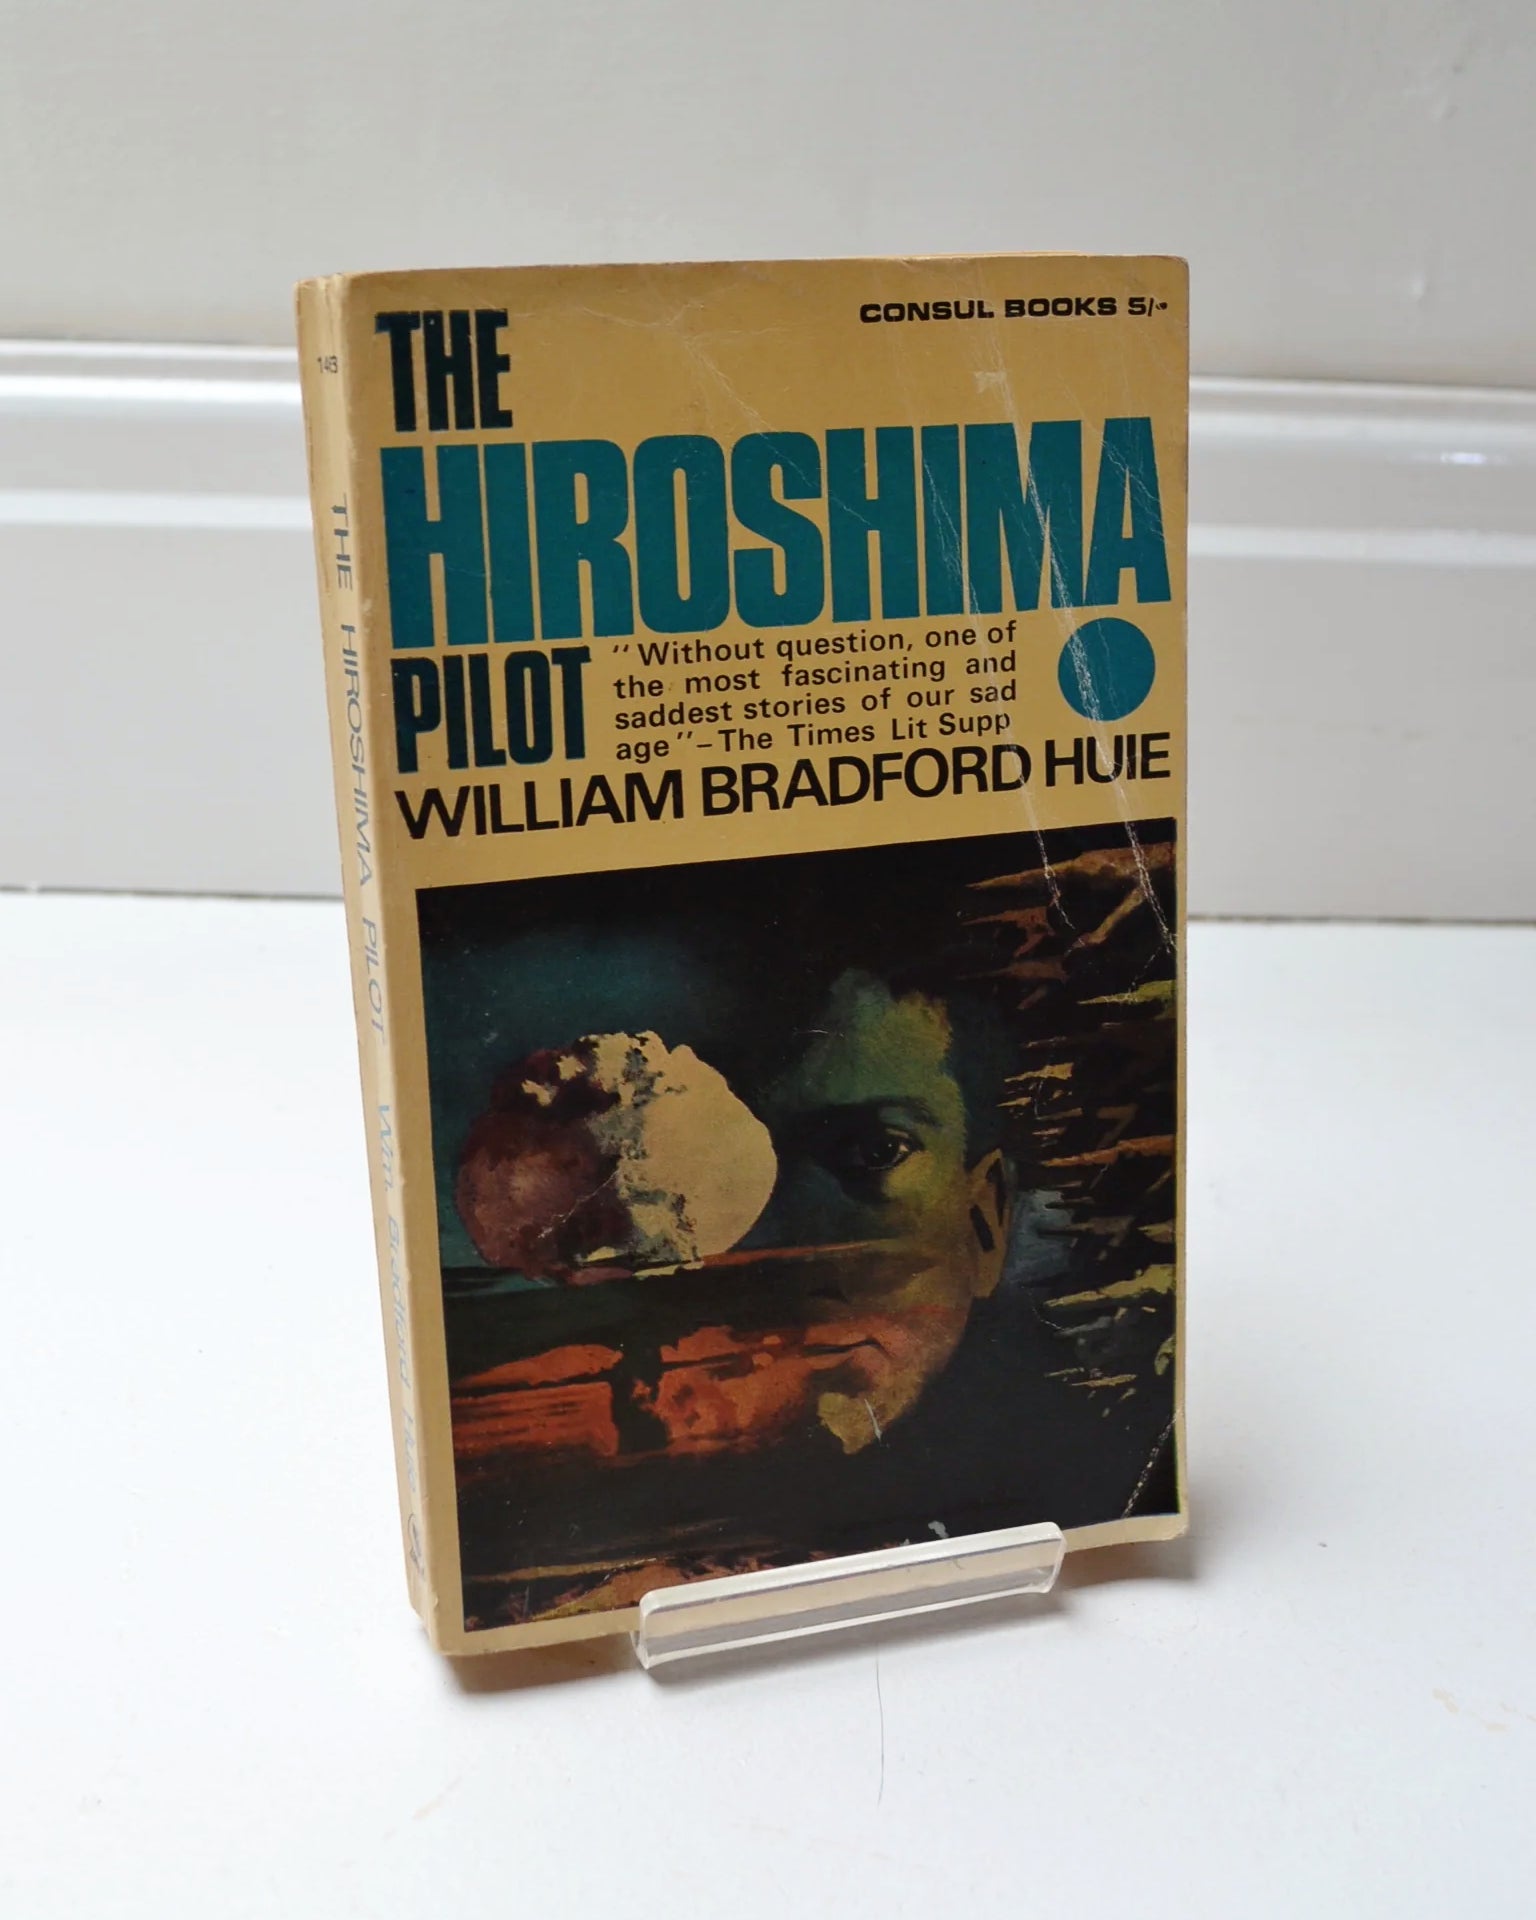 The Hiroshima Pilot by William Bradford Huie (World Distributors / 1966)